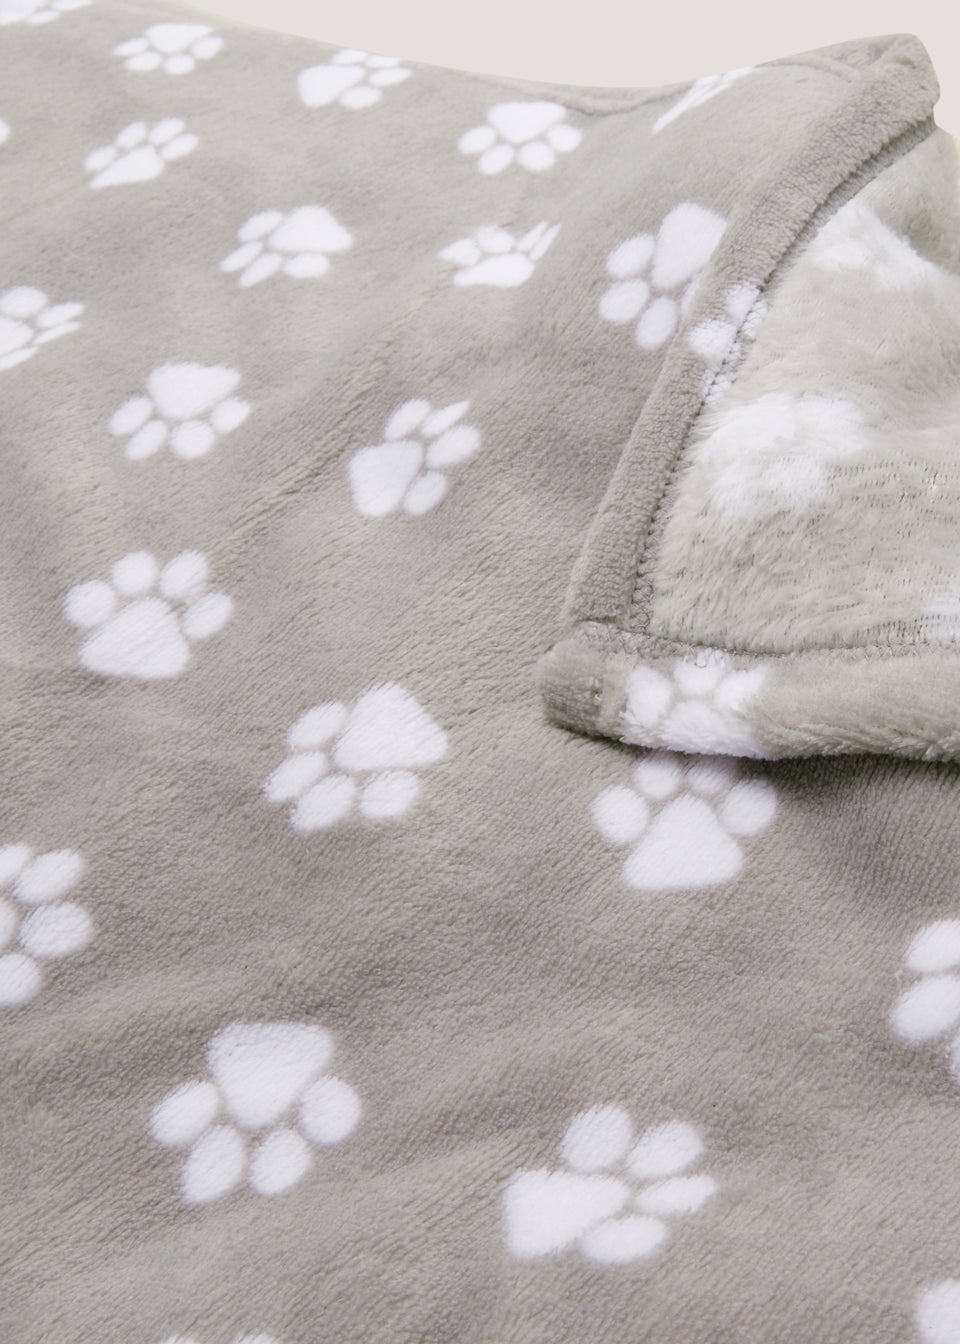 Grey Paw Print Pet Fleece Blanket (130cm x 150cm)